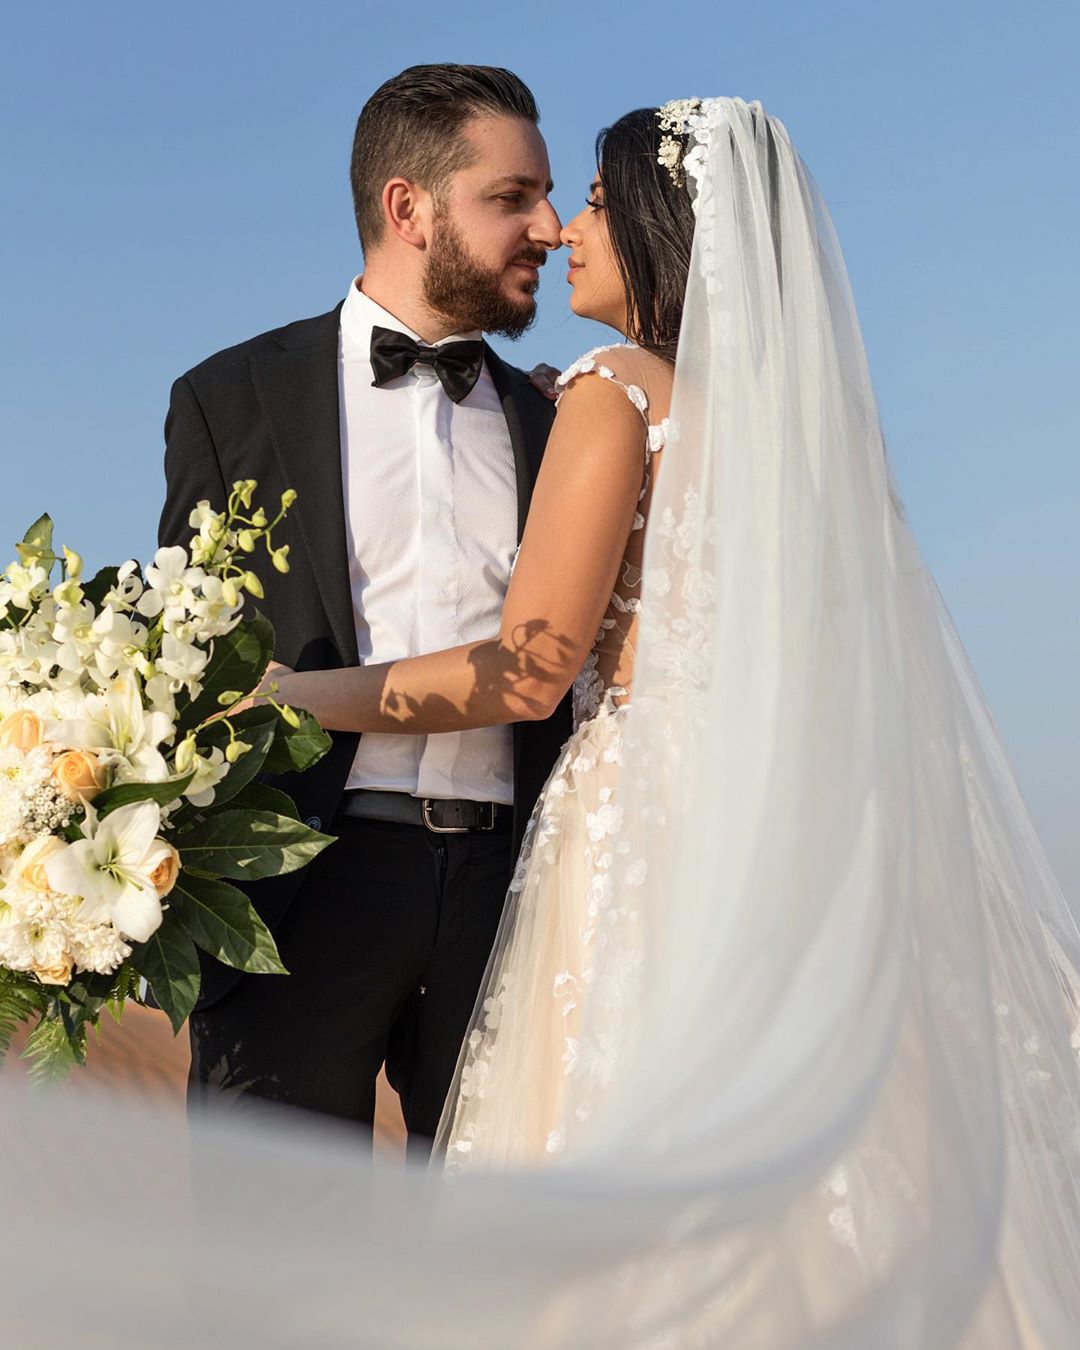 Book Dubai Wedding Photography Service. Hire Professional Wedding Photographer. Contact DubaiContent.Pro